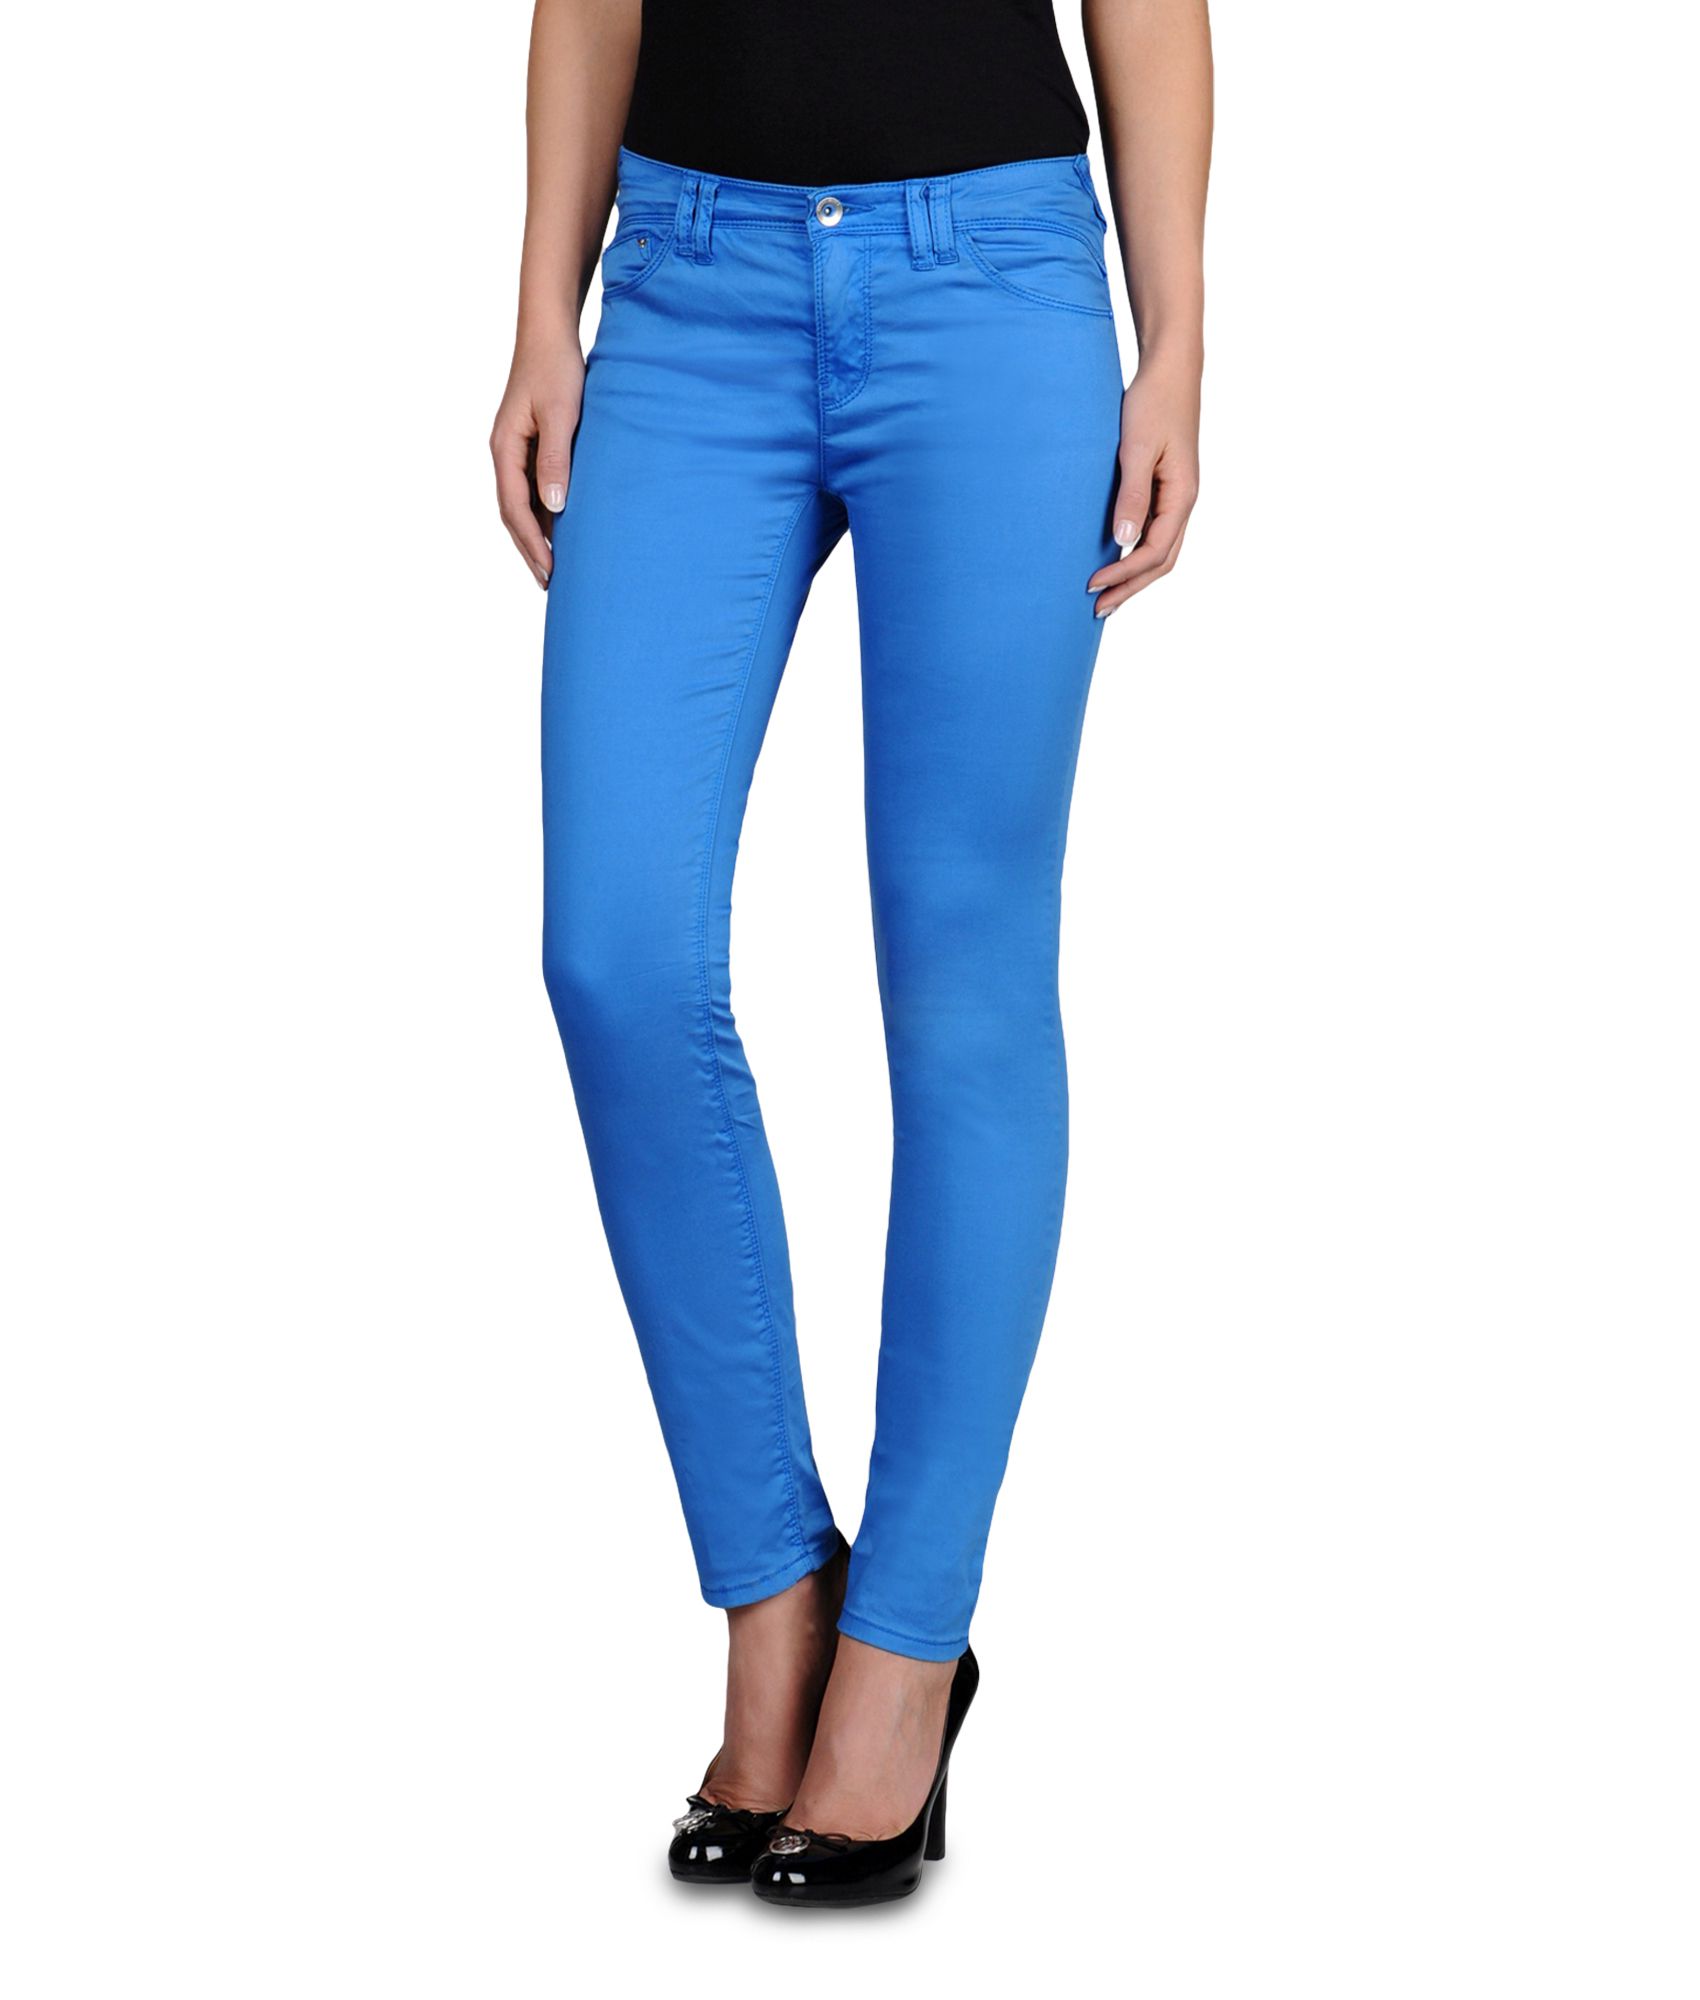 Lyst - Armani jeans Slim Fit Jeans Vintage Look Stretch Satin in Blue